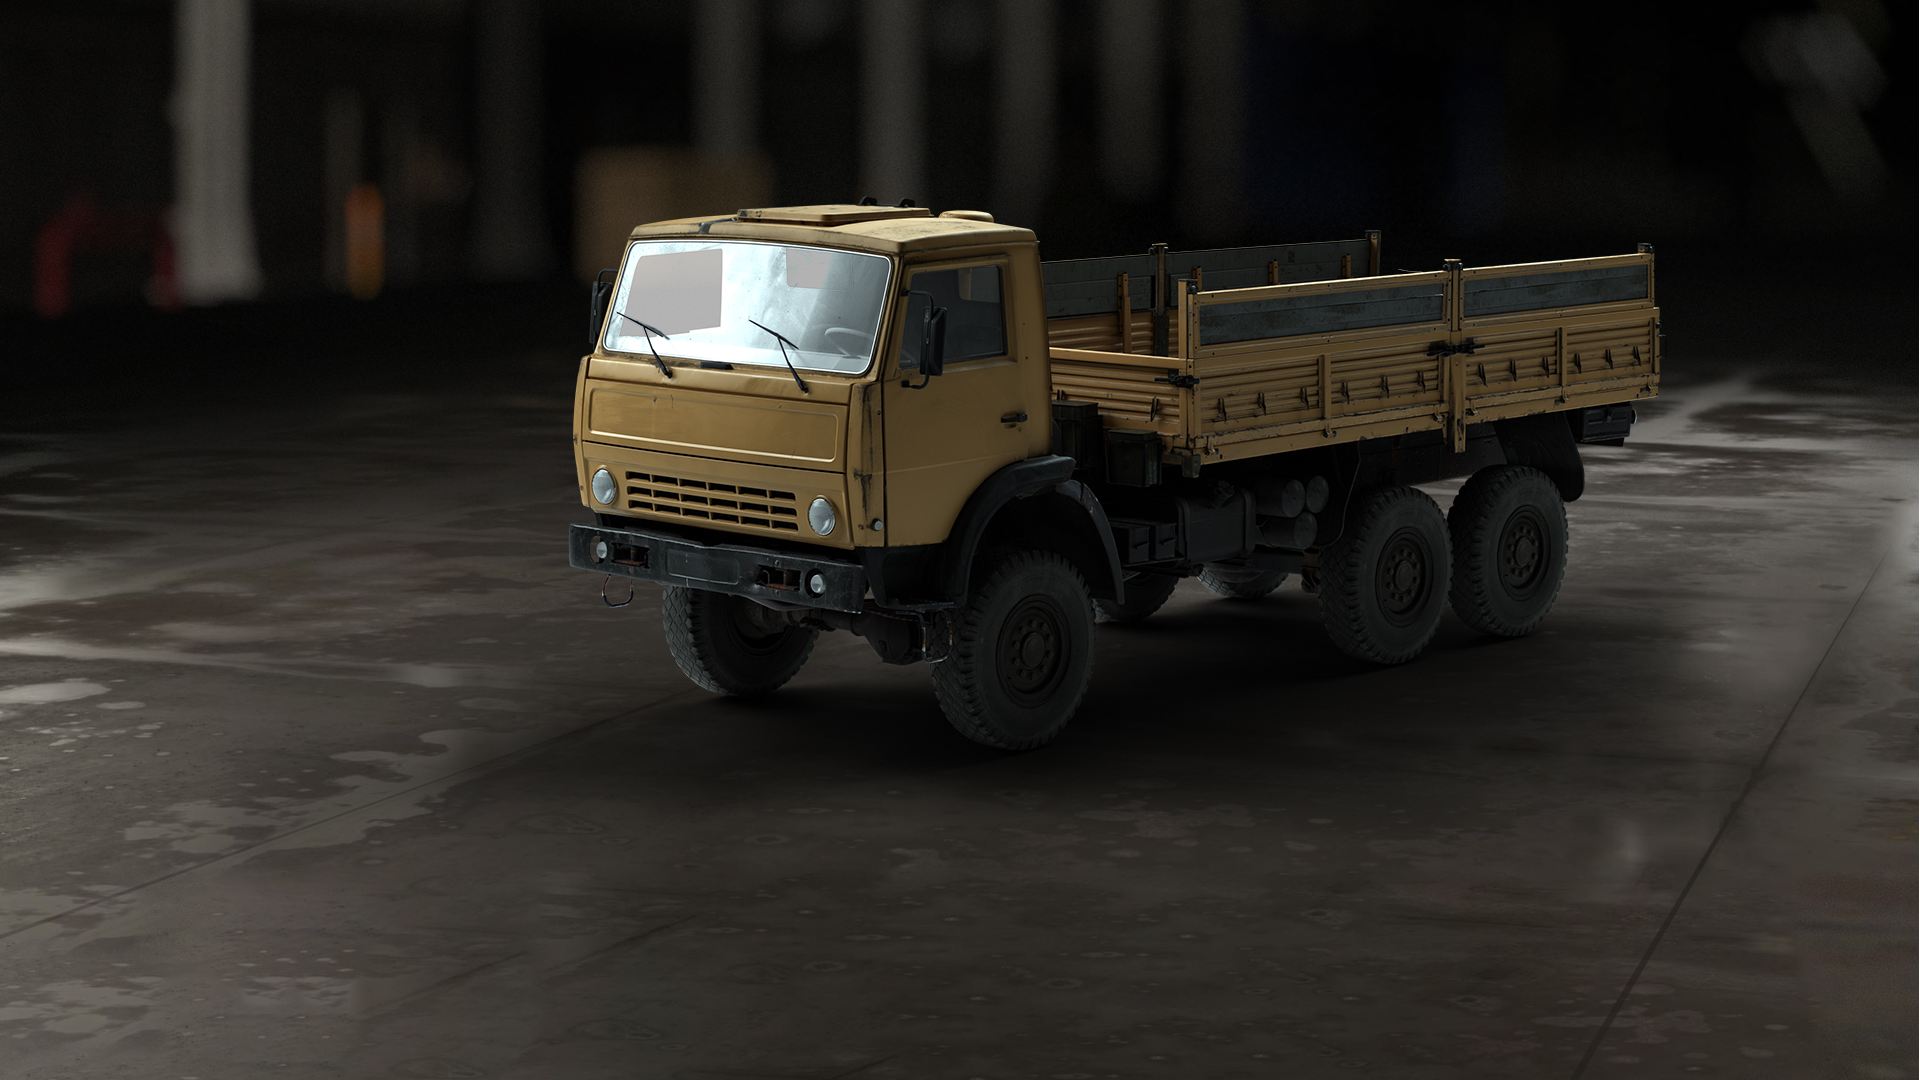 Modern Warfare 2 Vehicles: The Cargo Truck can be seen